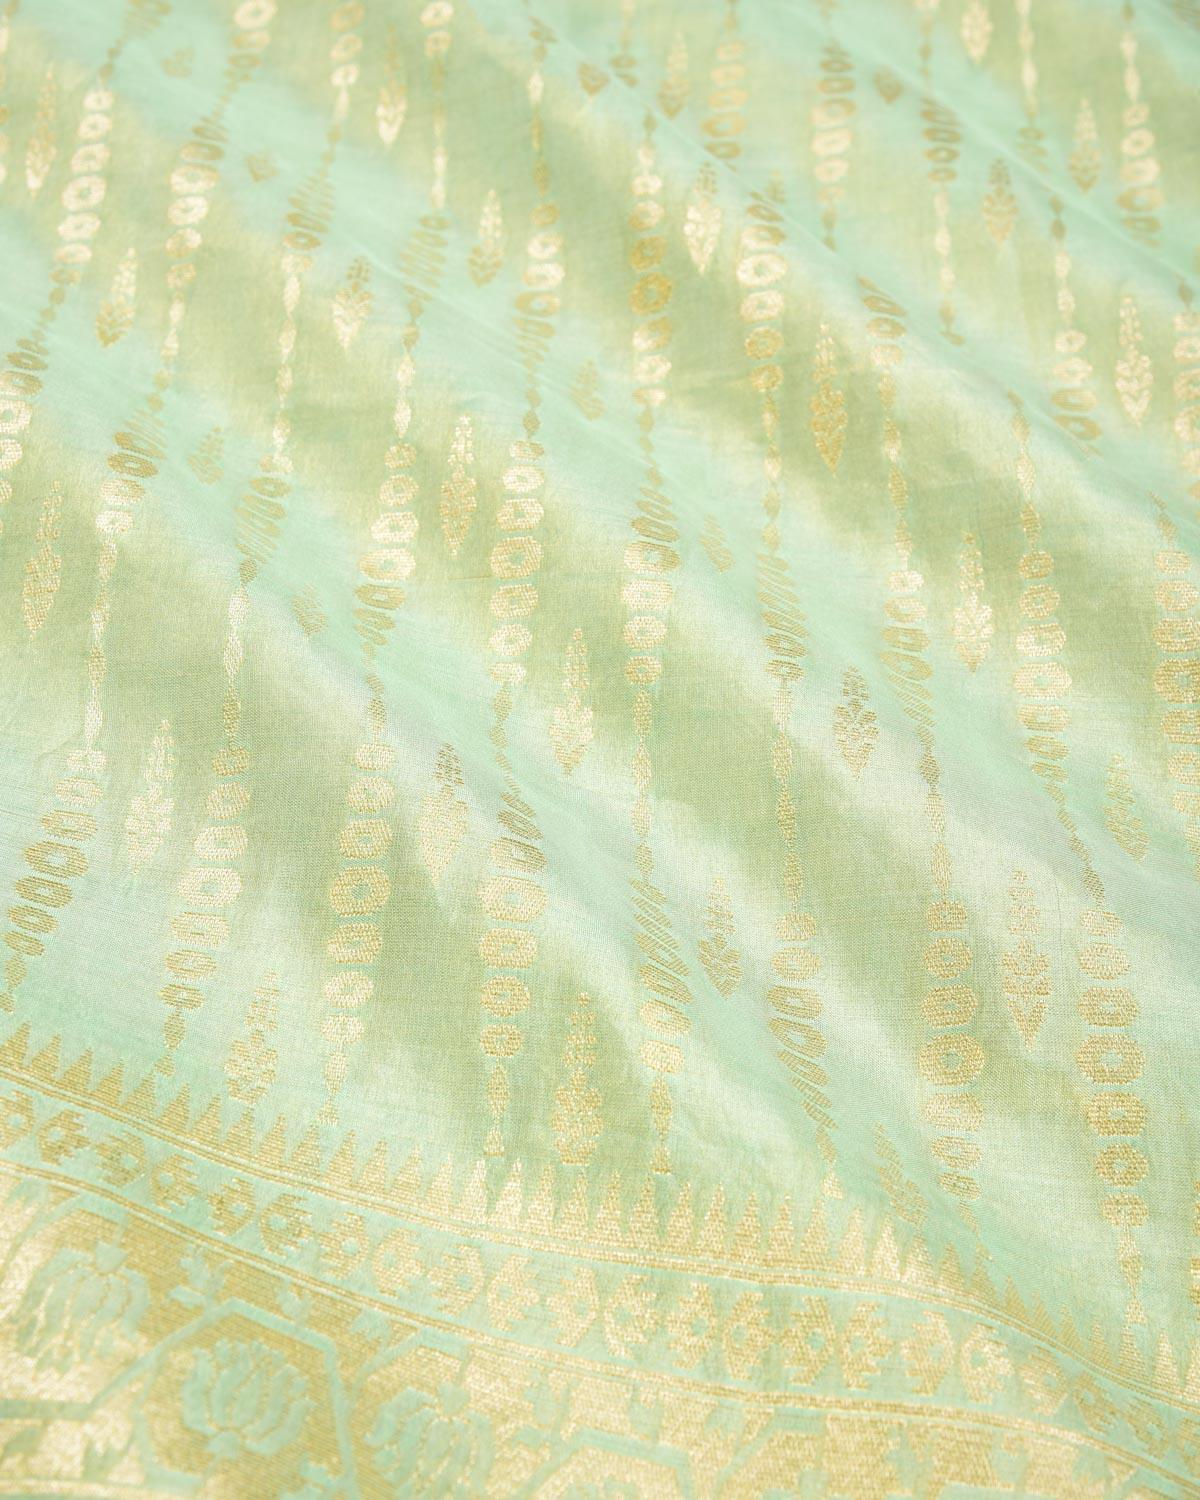 Celadon Green Banarasi Drop Stripes Sona Zari Cutwork Brocade Handwoven Kora Tissue Saree - By HolyWeaves, Benares